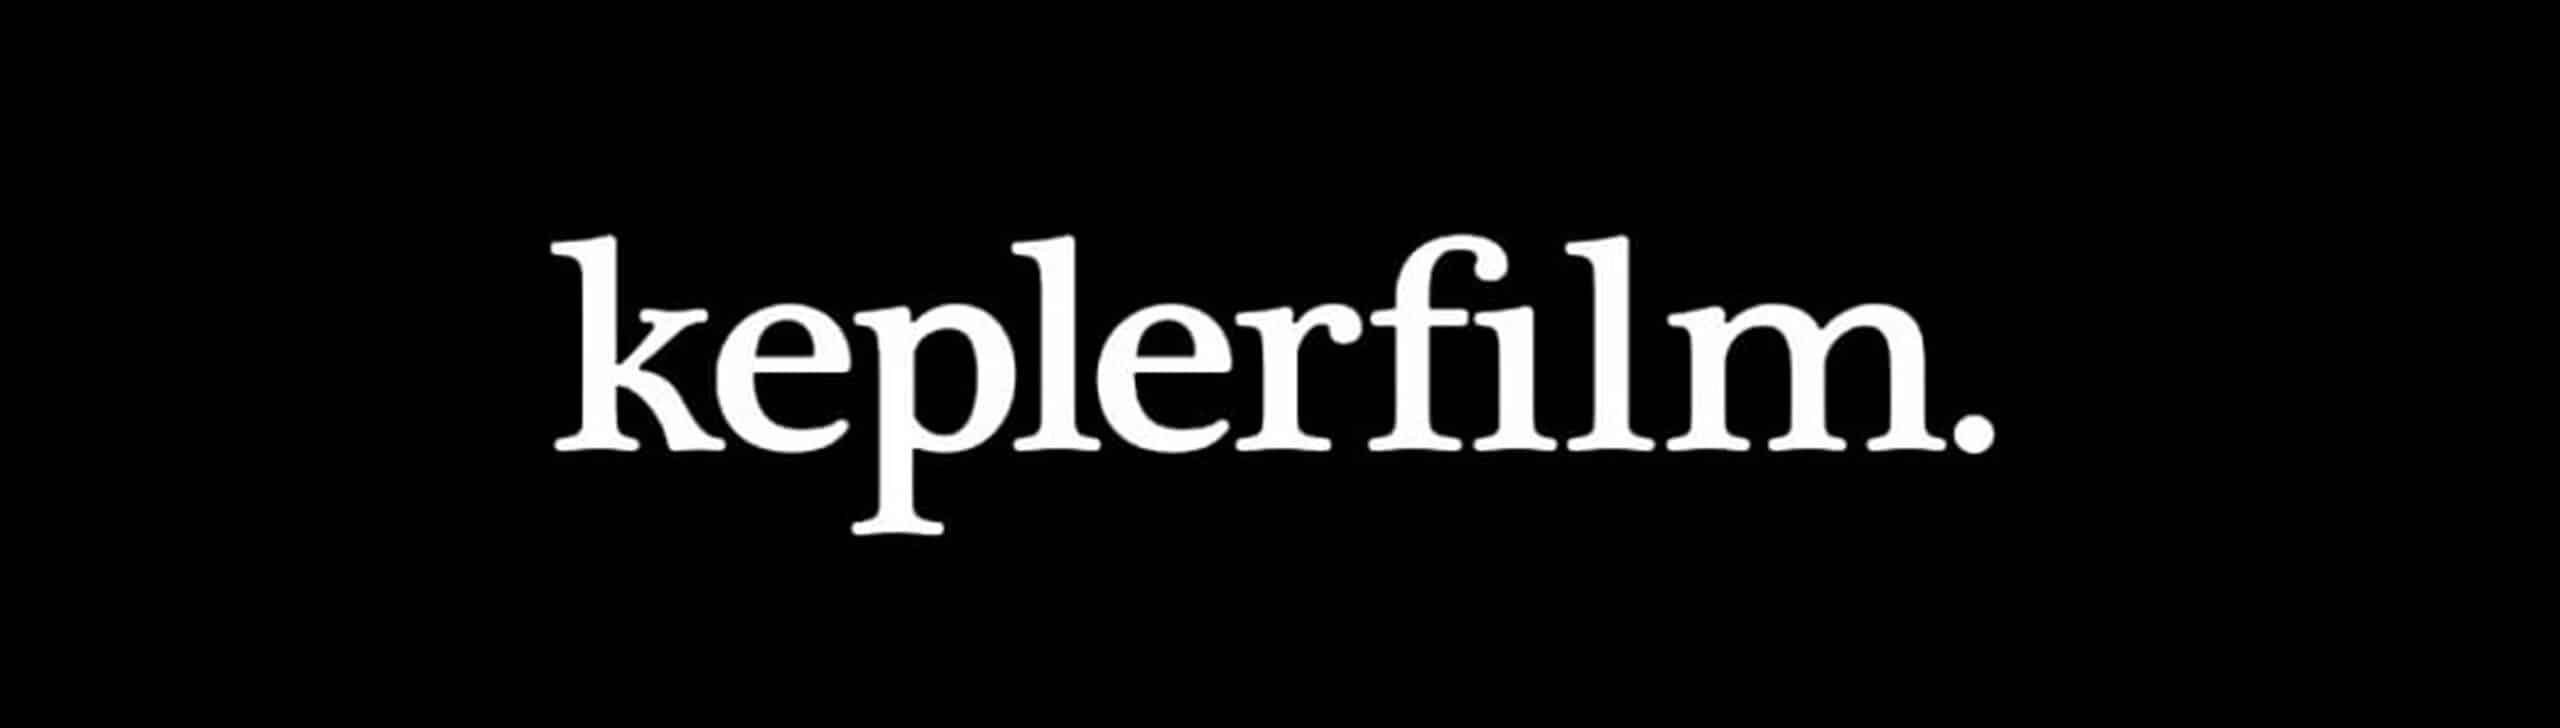 Keplerfilm-logo